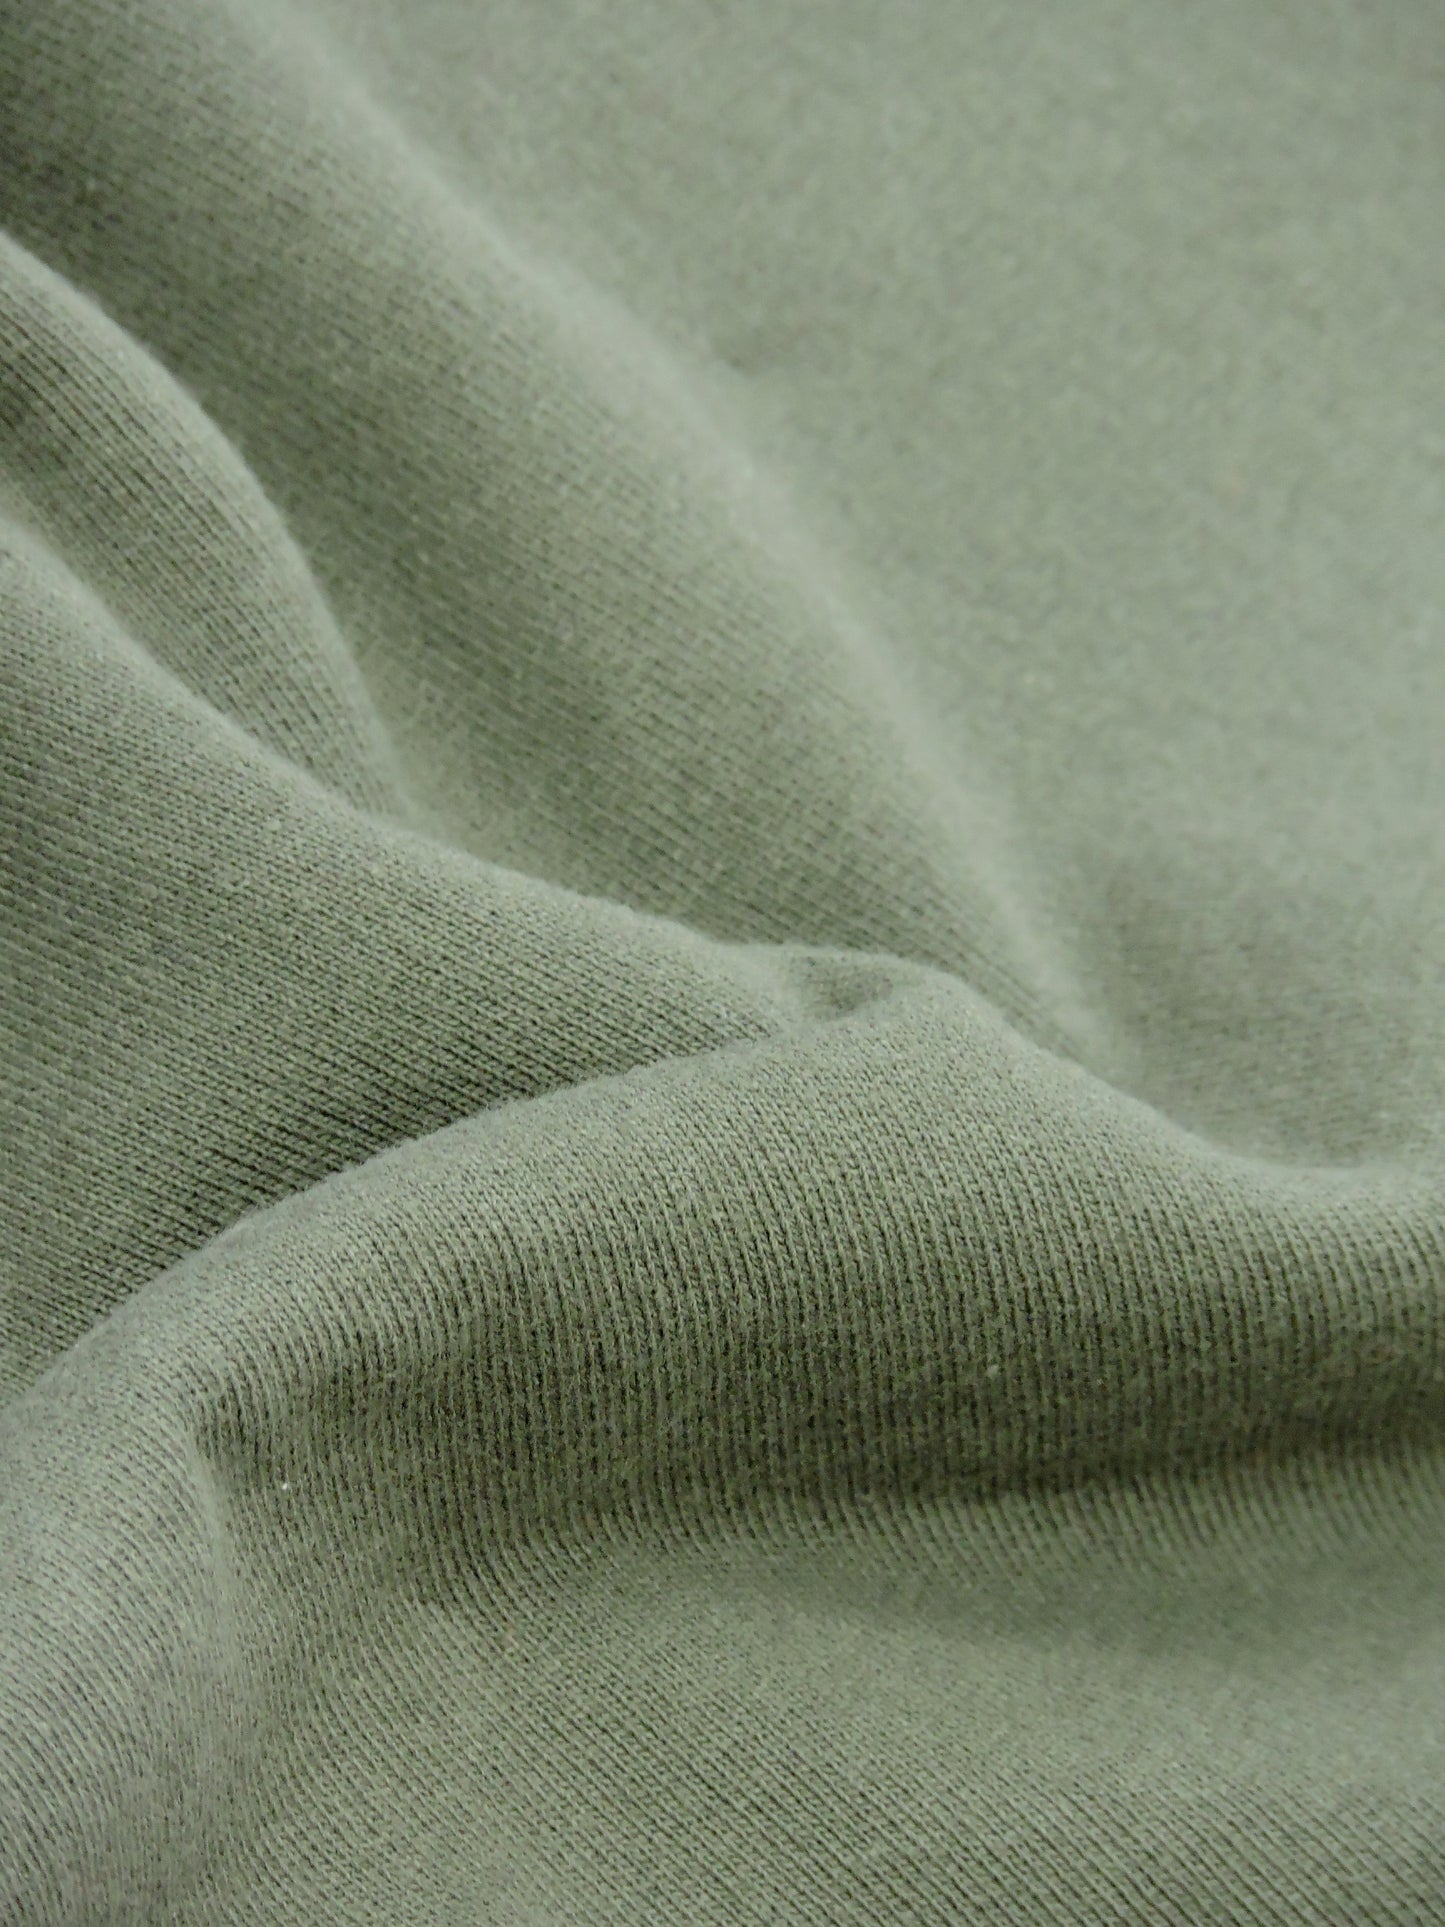 Close up of organic cotton fleece material